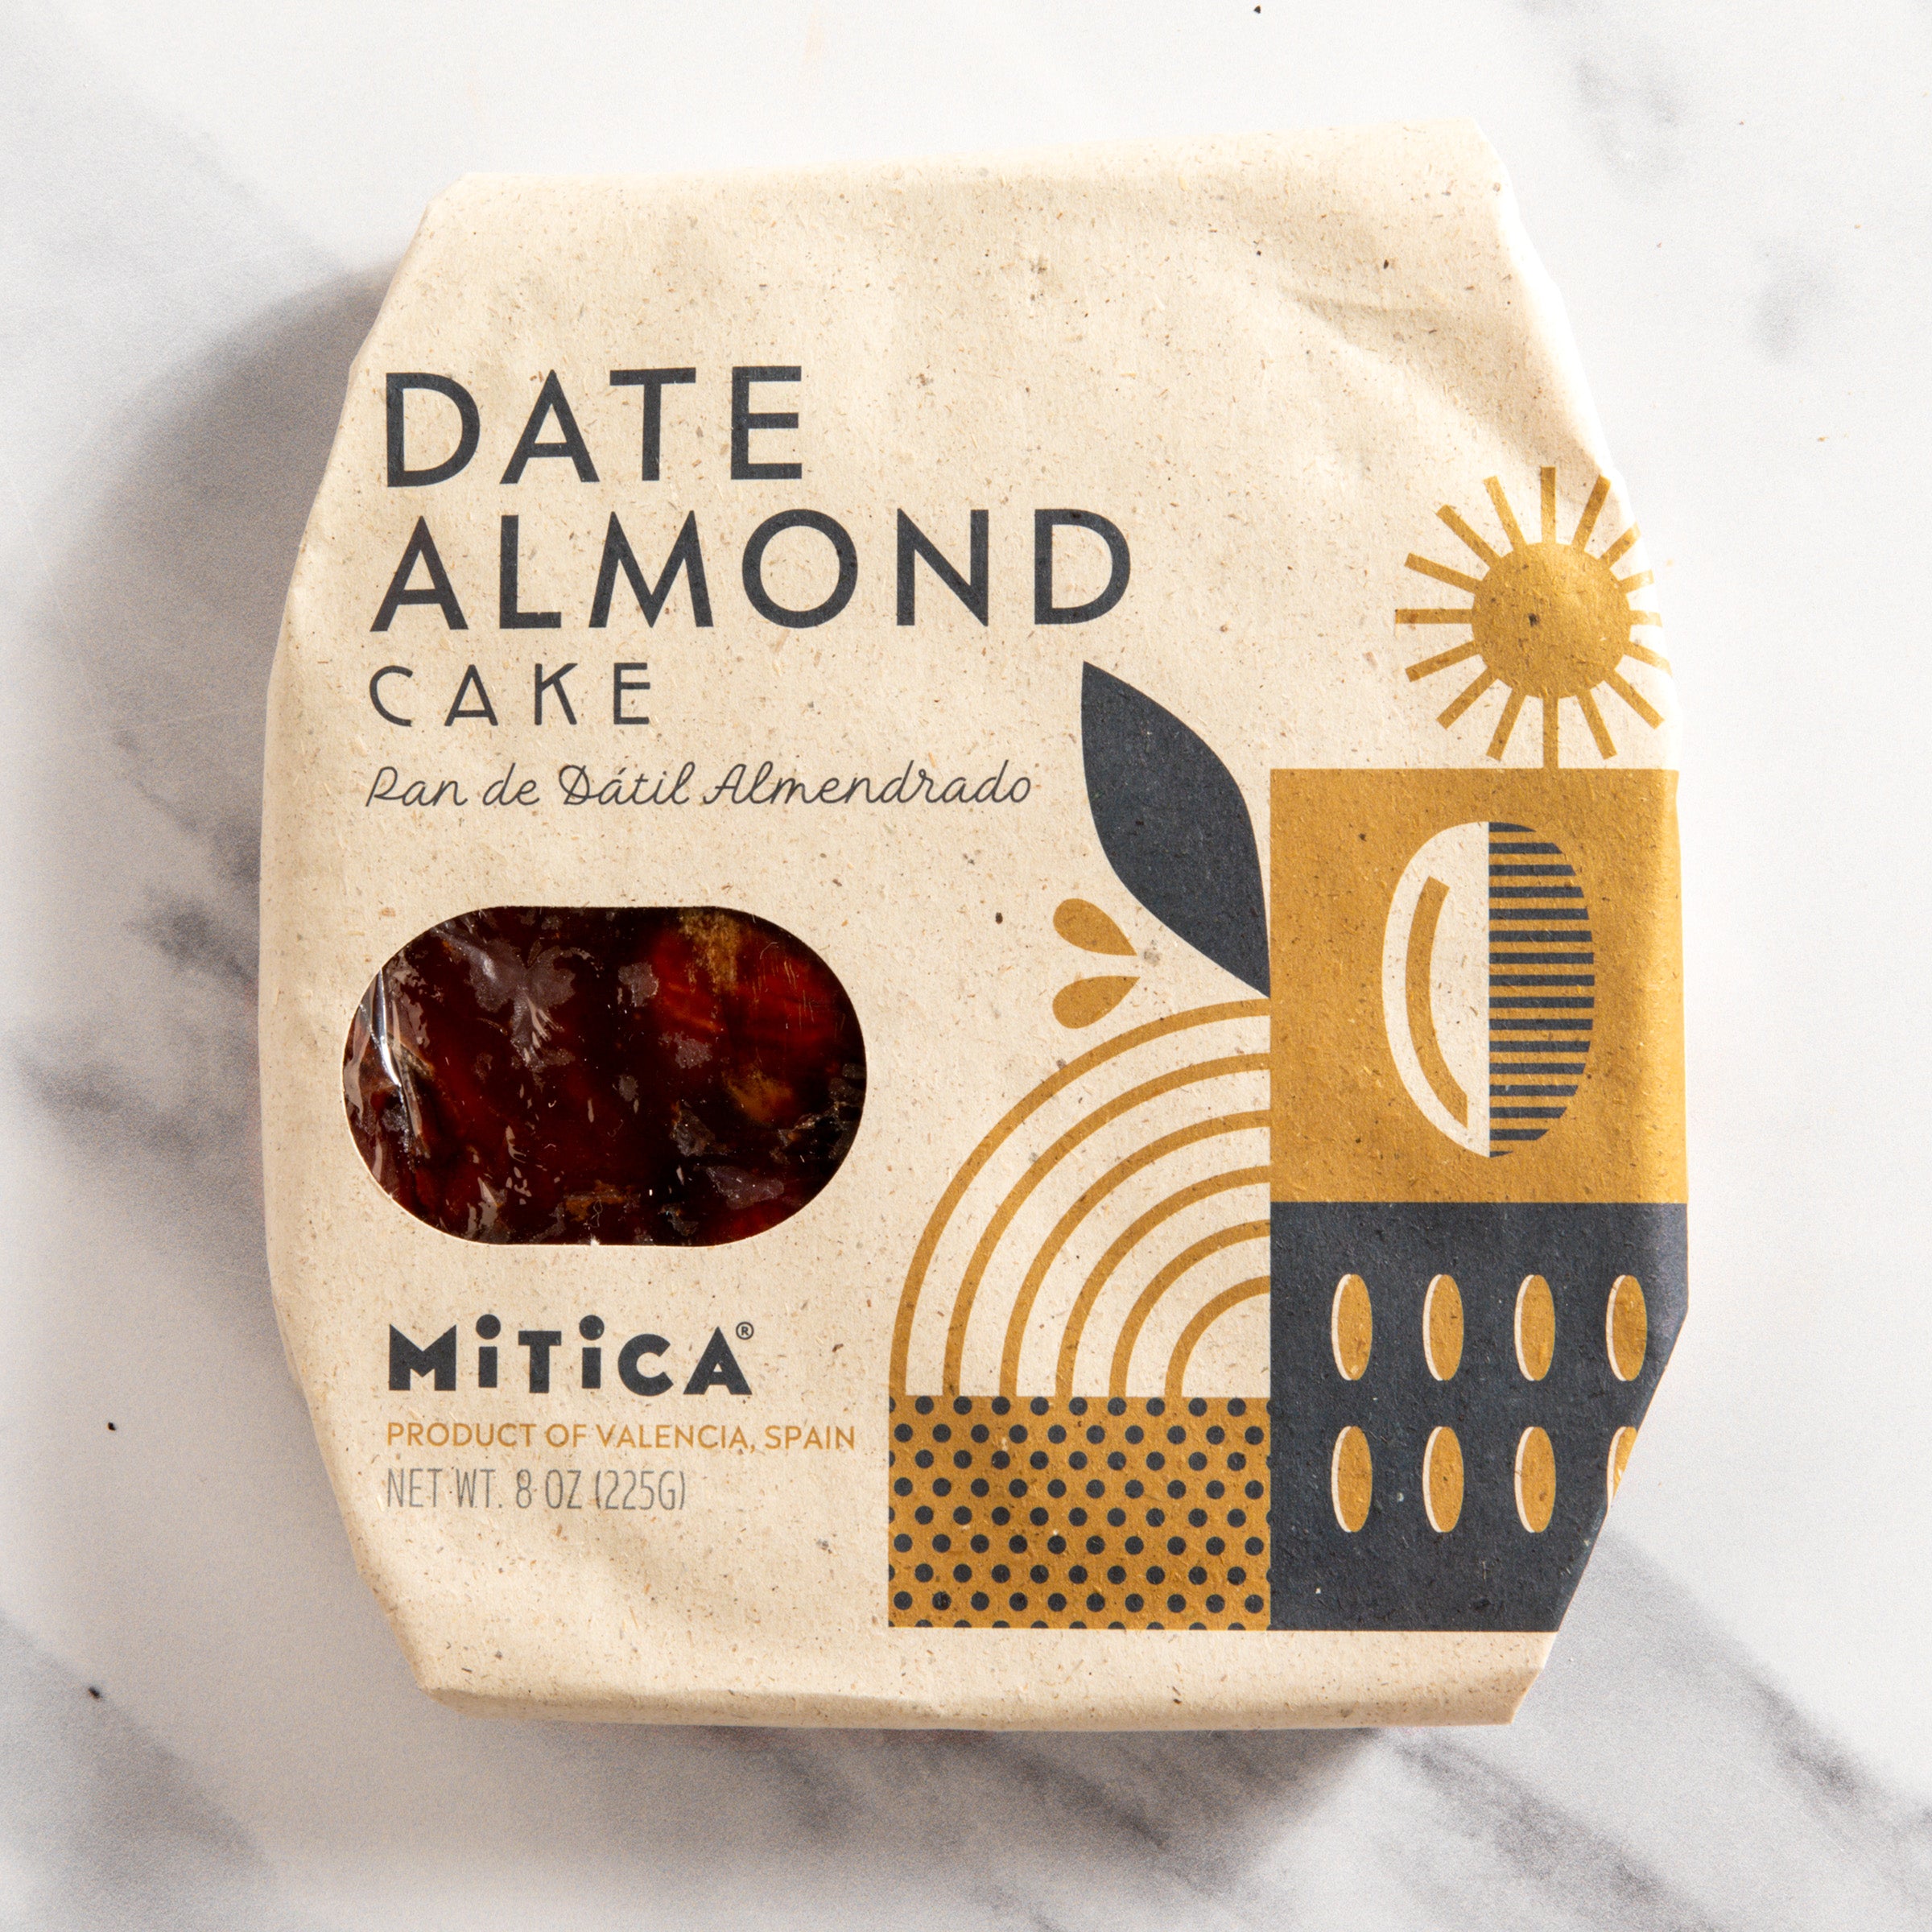 igourmet_12846_date almond cake pan de dated almendrado_mitica_dried fruit, nuts and seeds